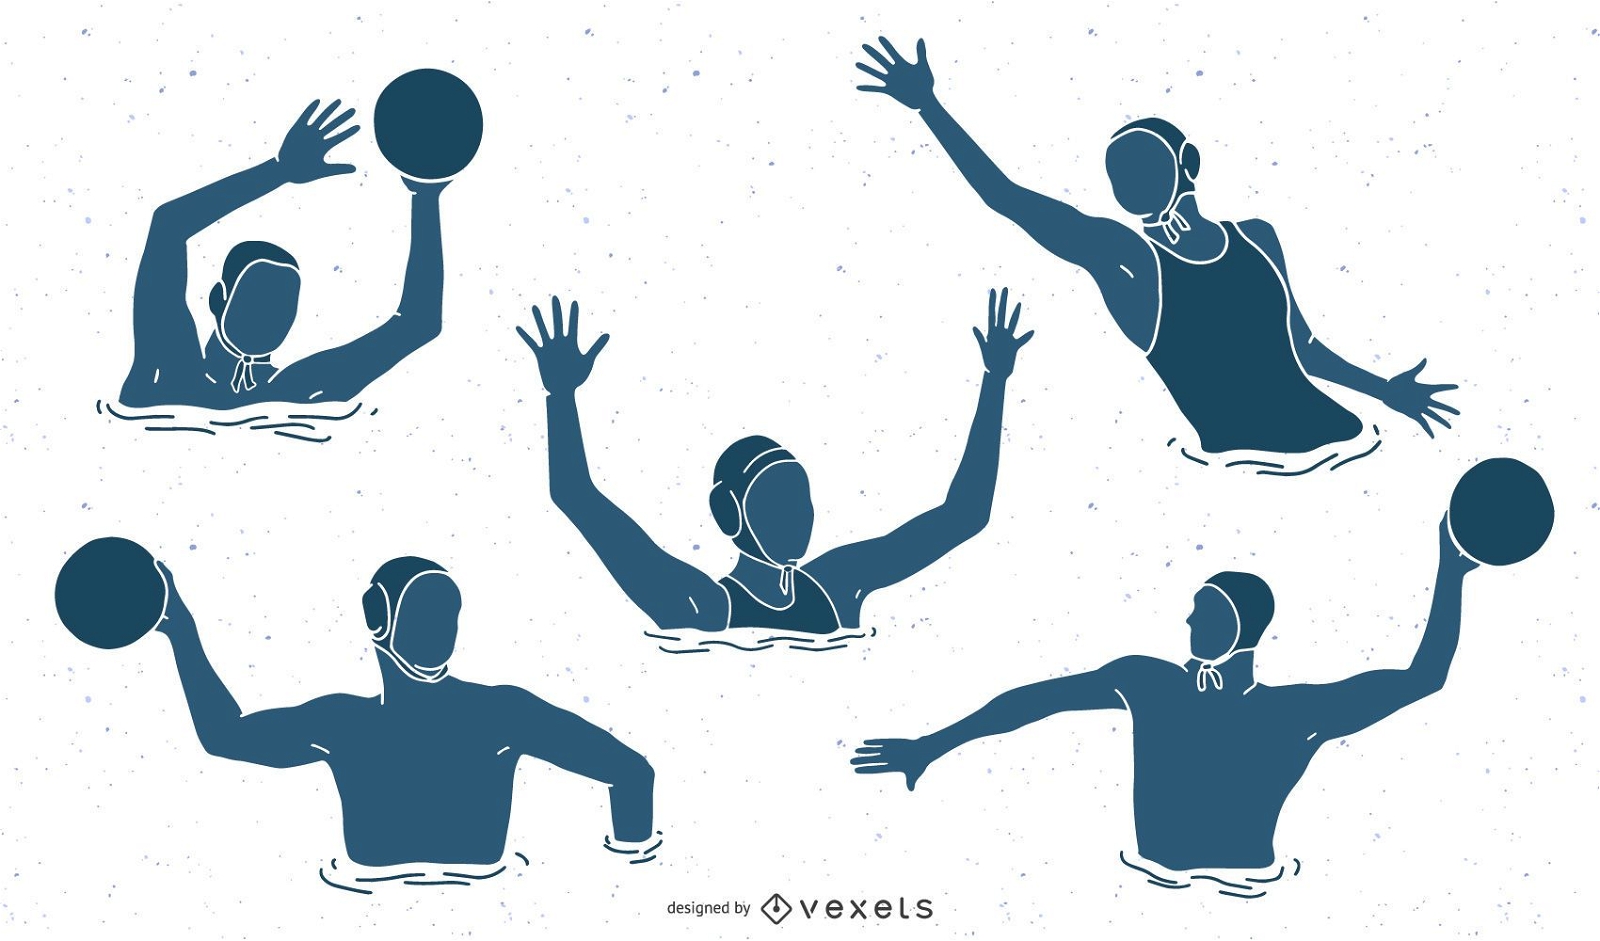 Wasserball-Sportler-Silhouette-Pack